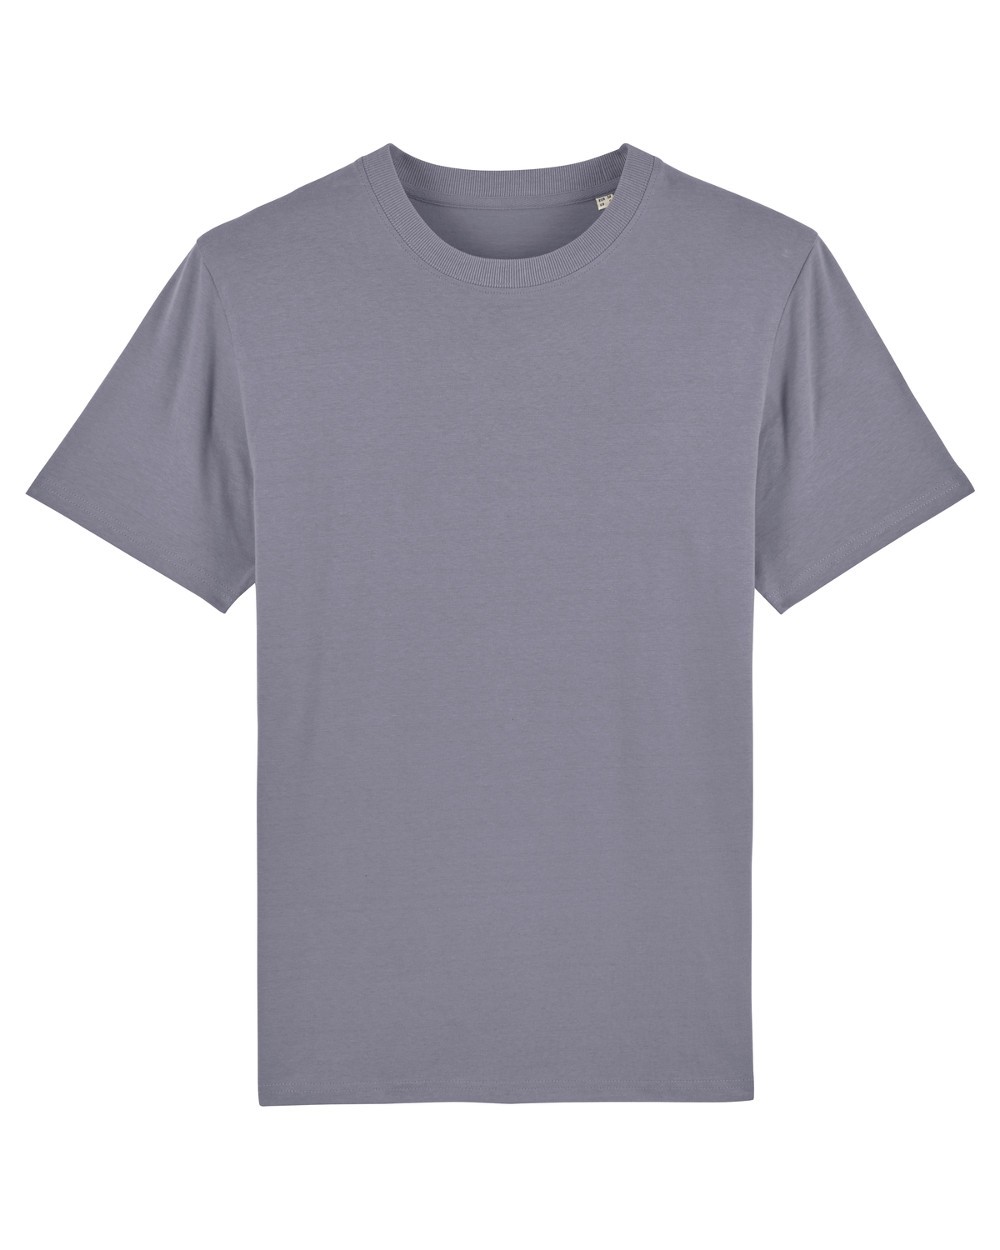 MS Regular Fit Heavy T-Shirt lava grey - gw Basics - HERREN | T-Shirts | Unifarben & Streifen